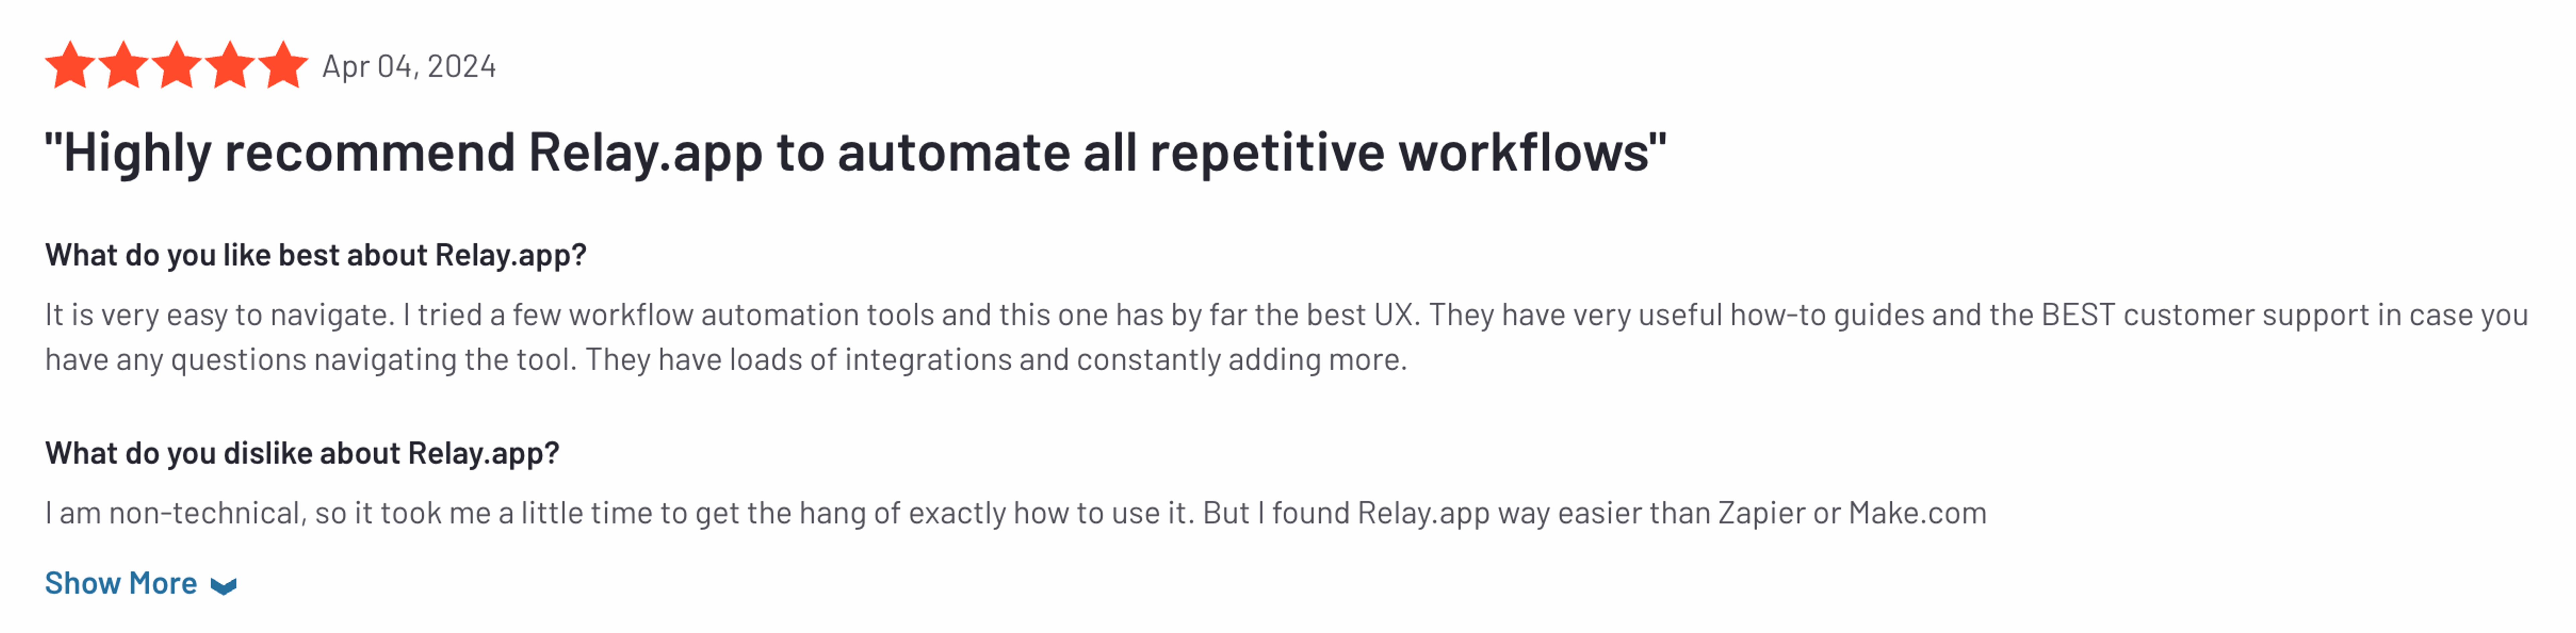 Relay.app review